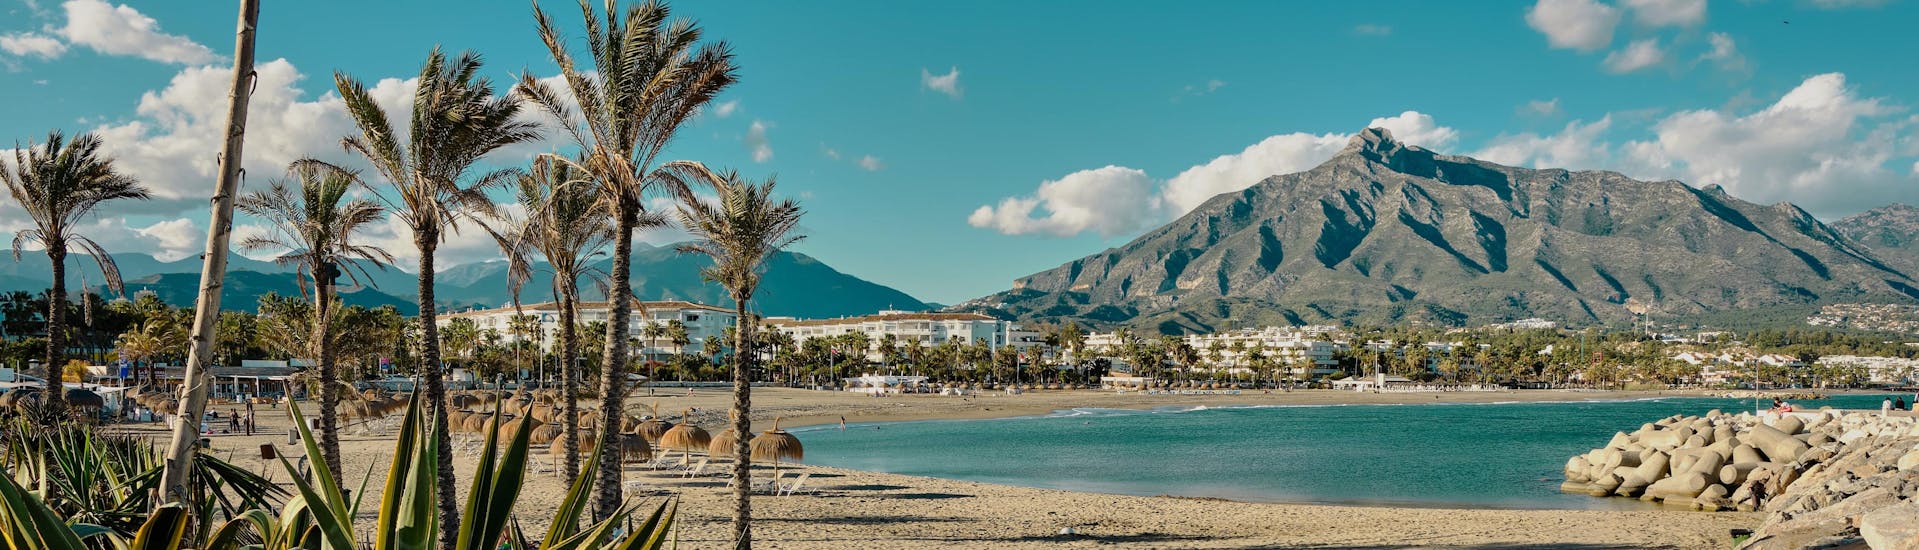 Vue de la plage de Marbella, en Espagne, une destination de vacances populaire. 